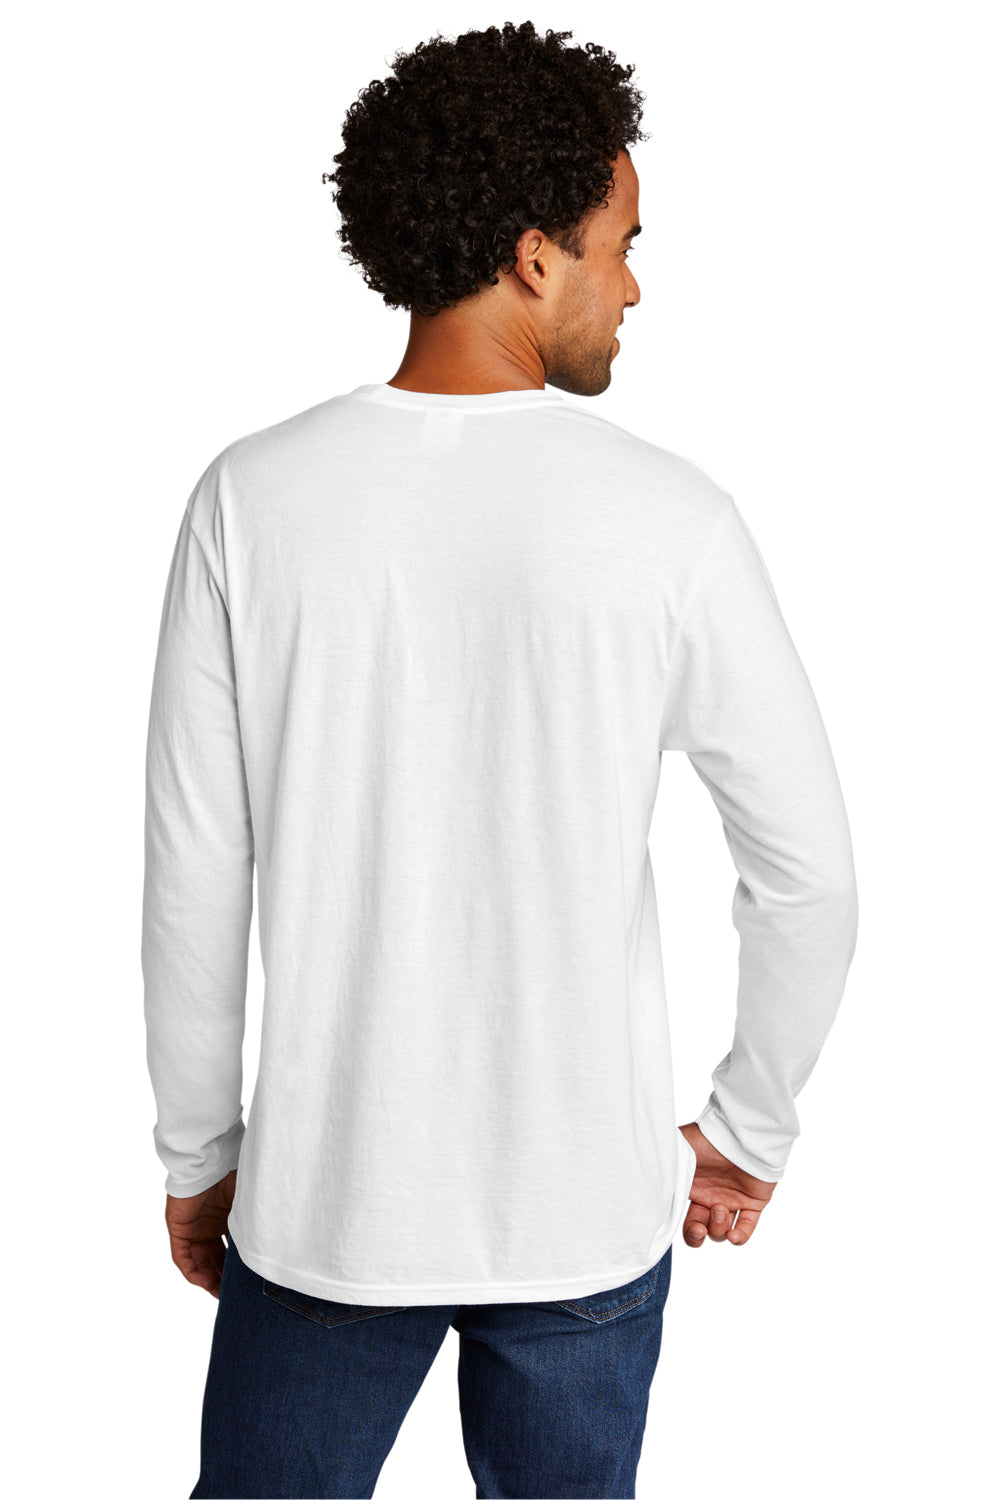 Port & Company Mens Long Sleeve Crewneck T-Shirt White Side